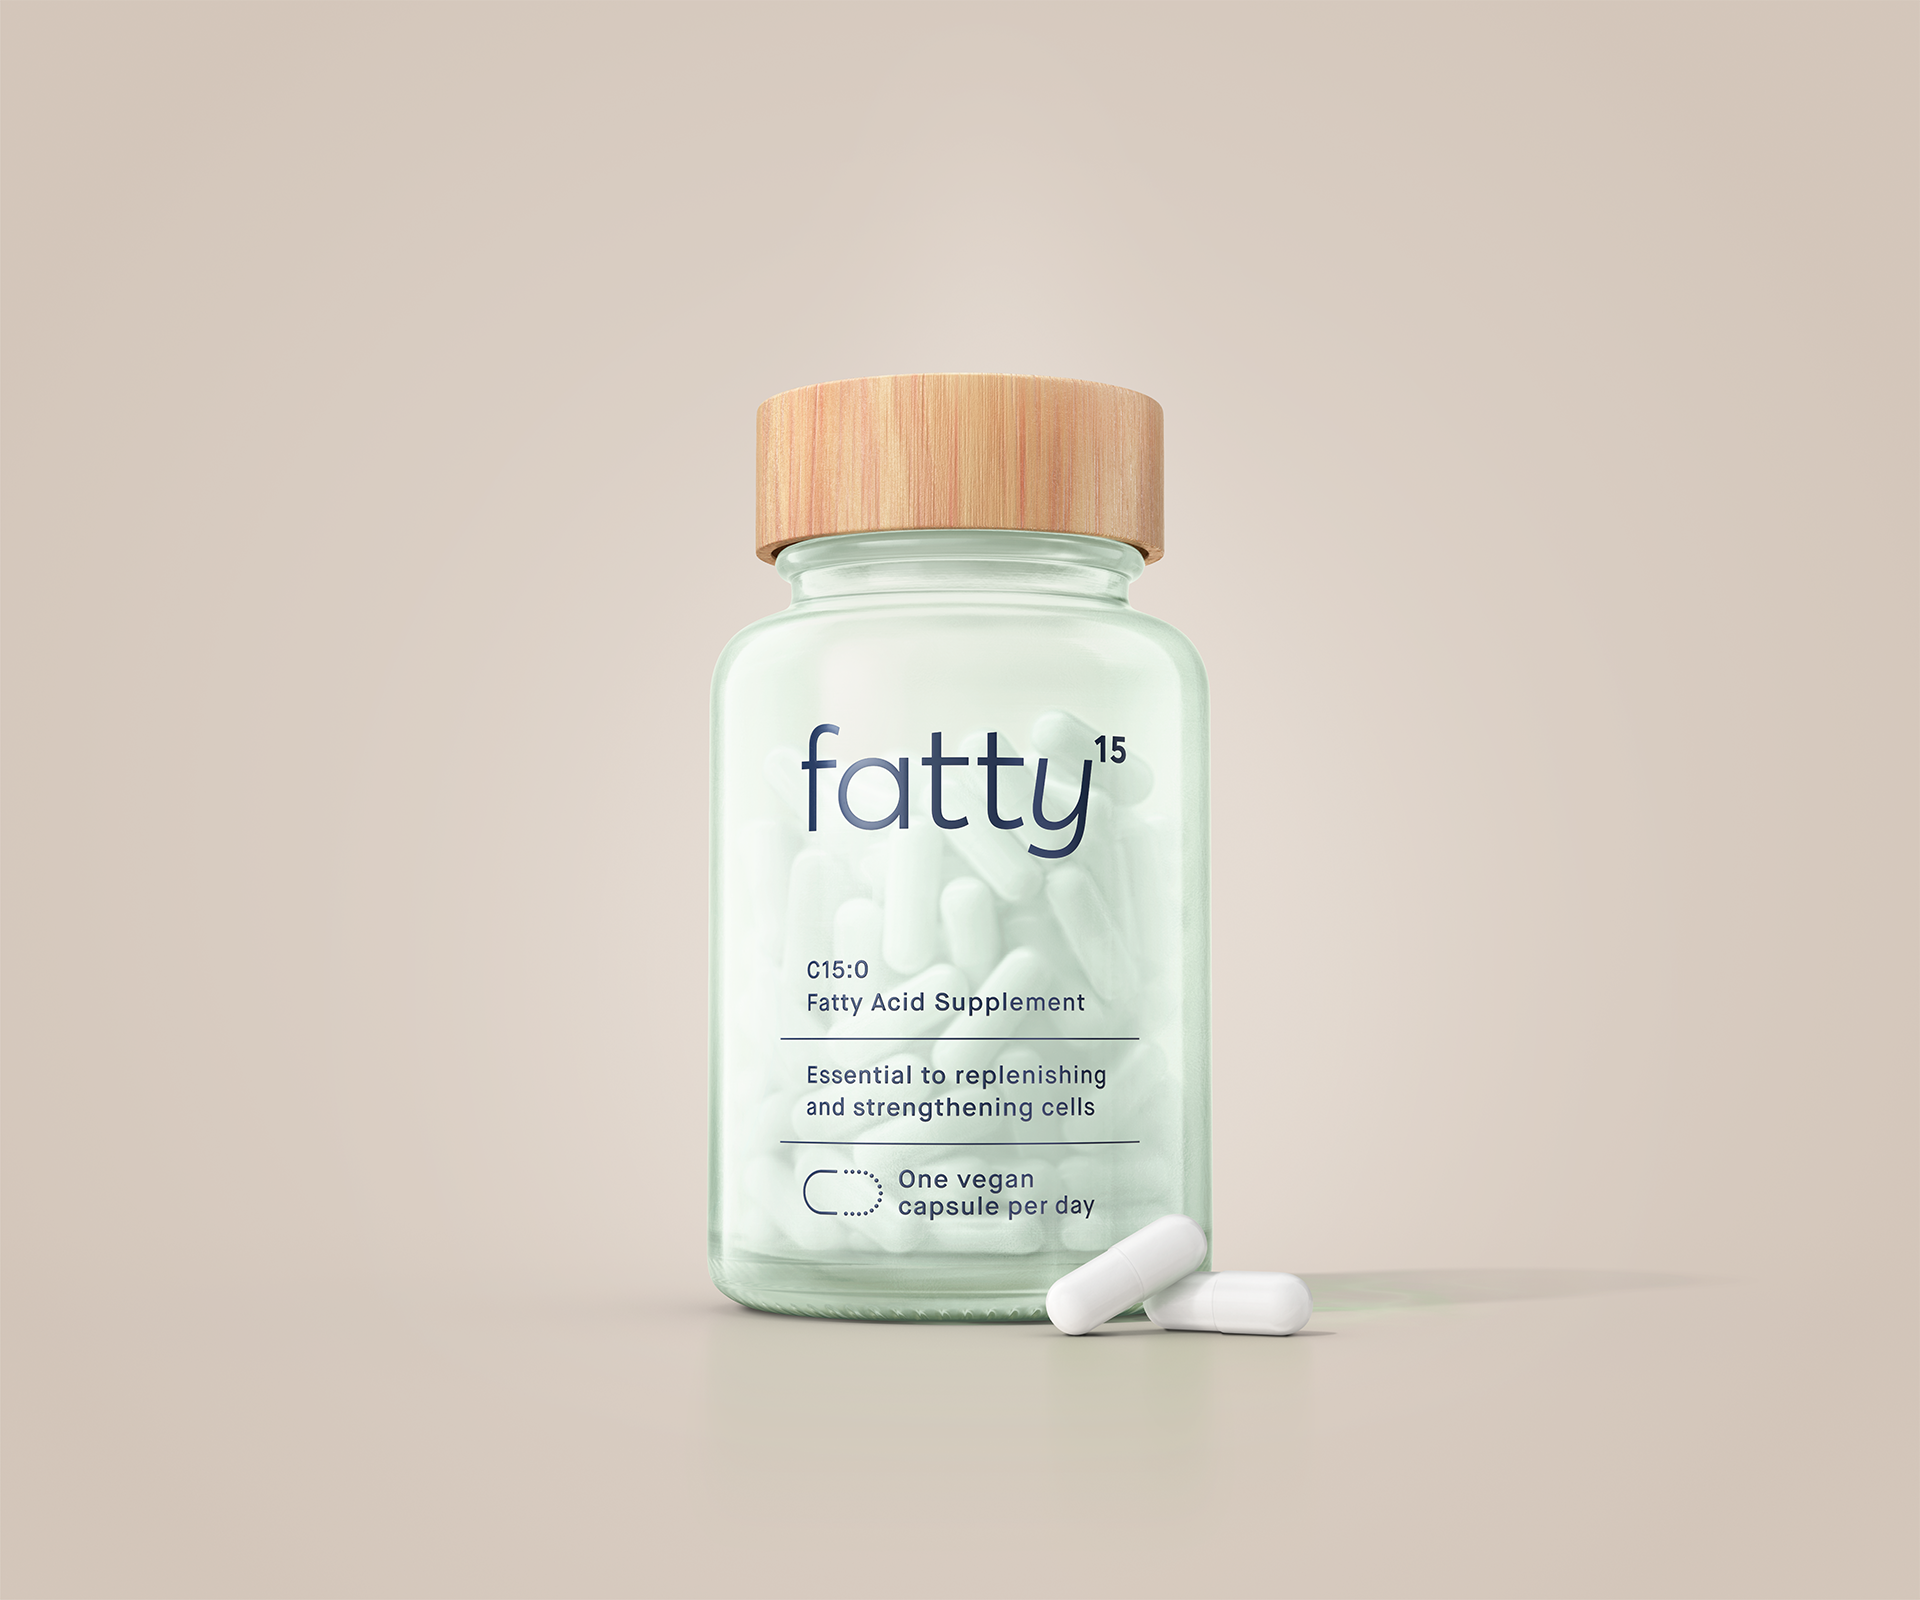 Phenomenon Creates Breakthrough Packaging For New Supplement fatty15